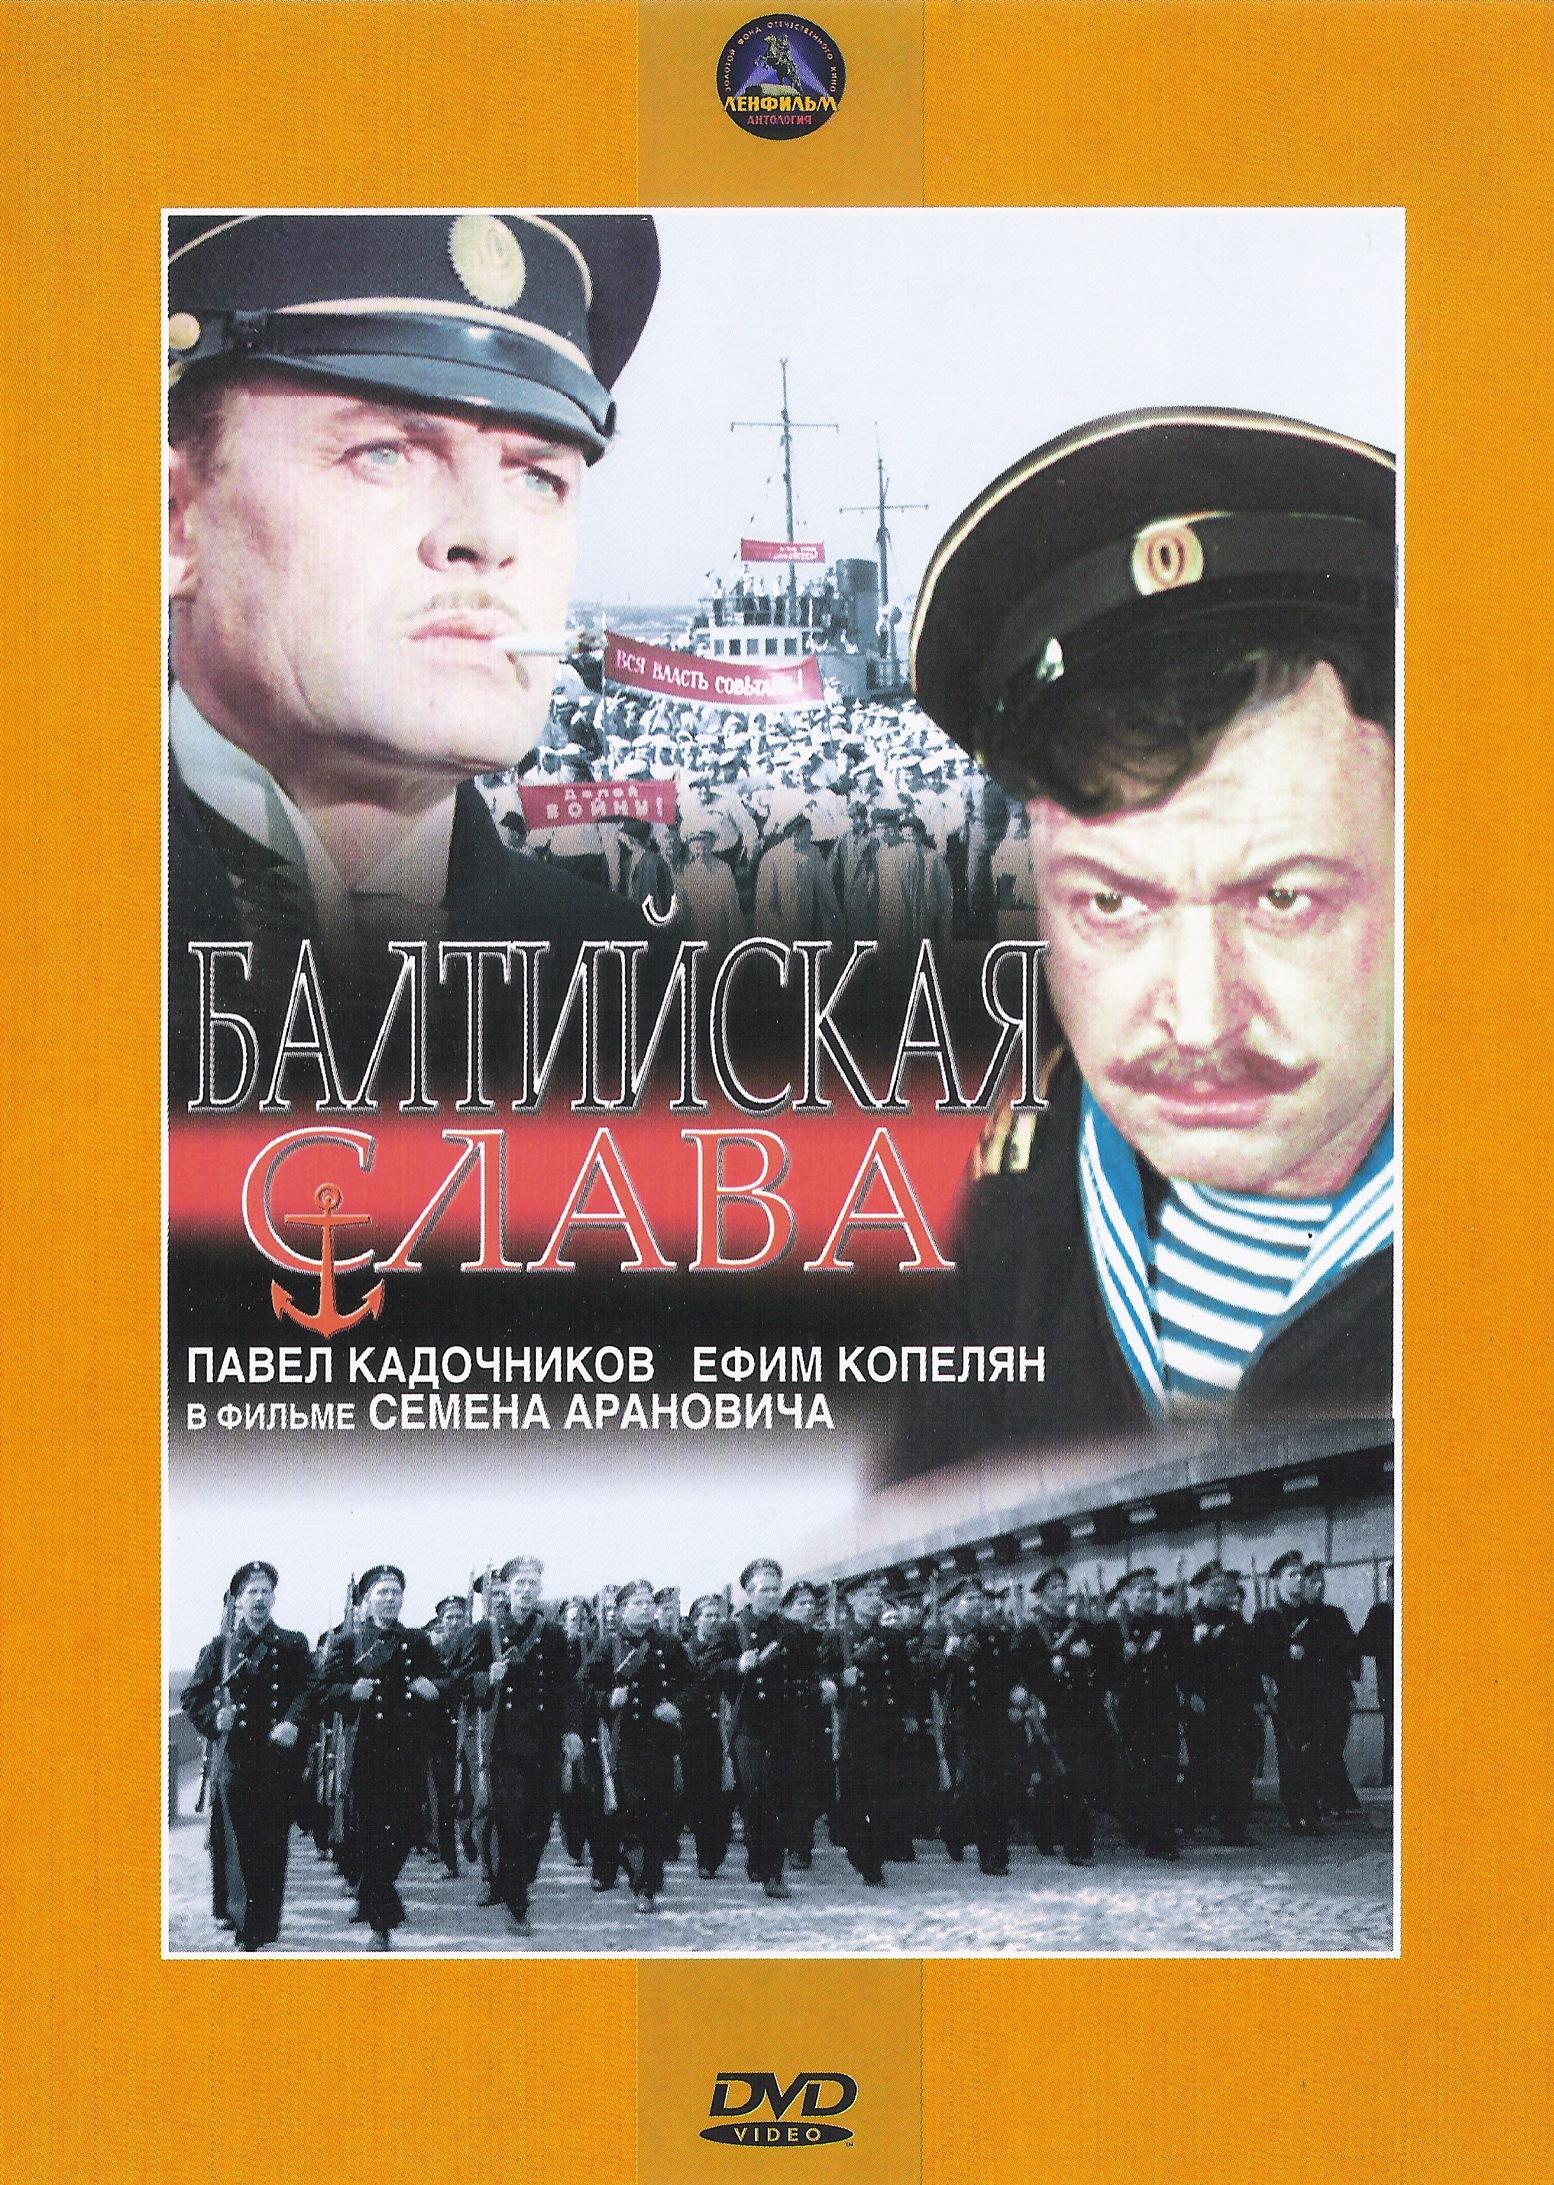 Постер фильма Балтийская слава | Baltiyskaya slava